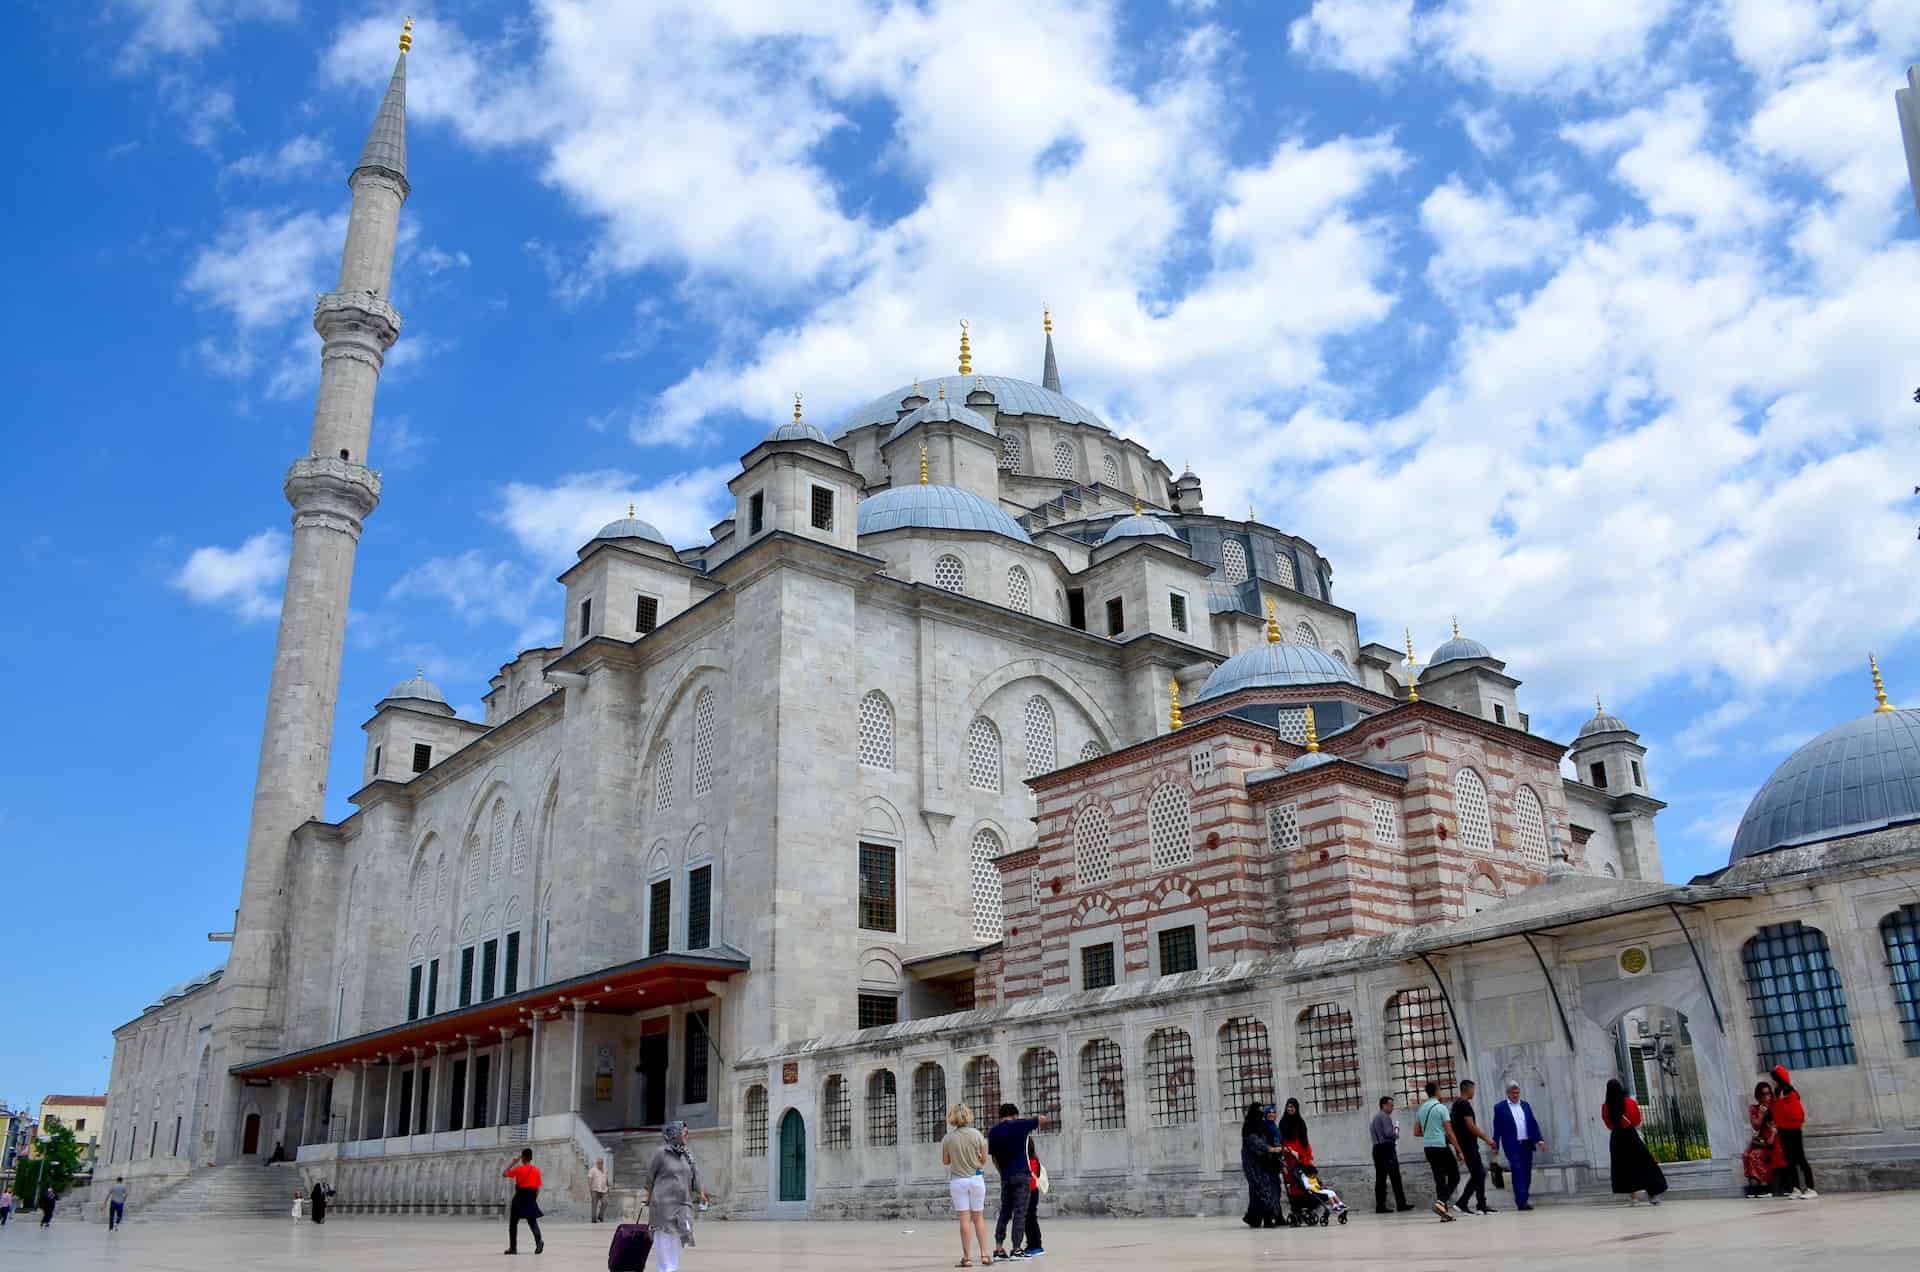 Fatih Mosque in Istanbul, Turkey